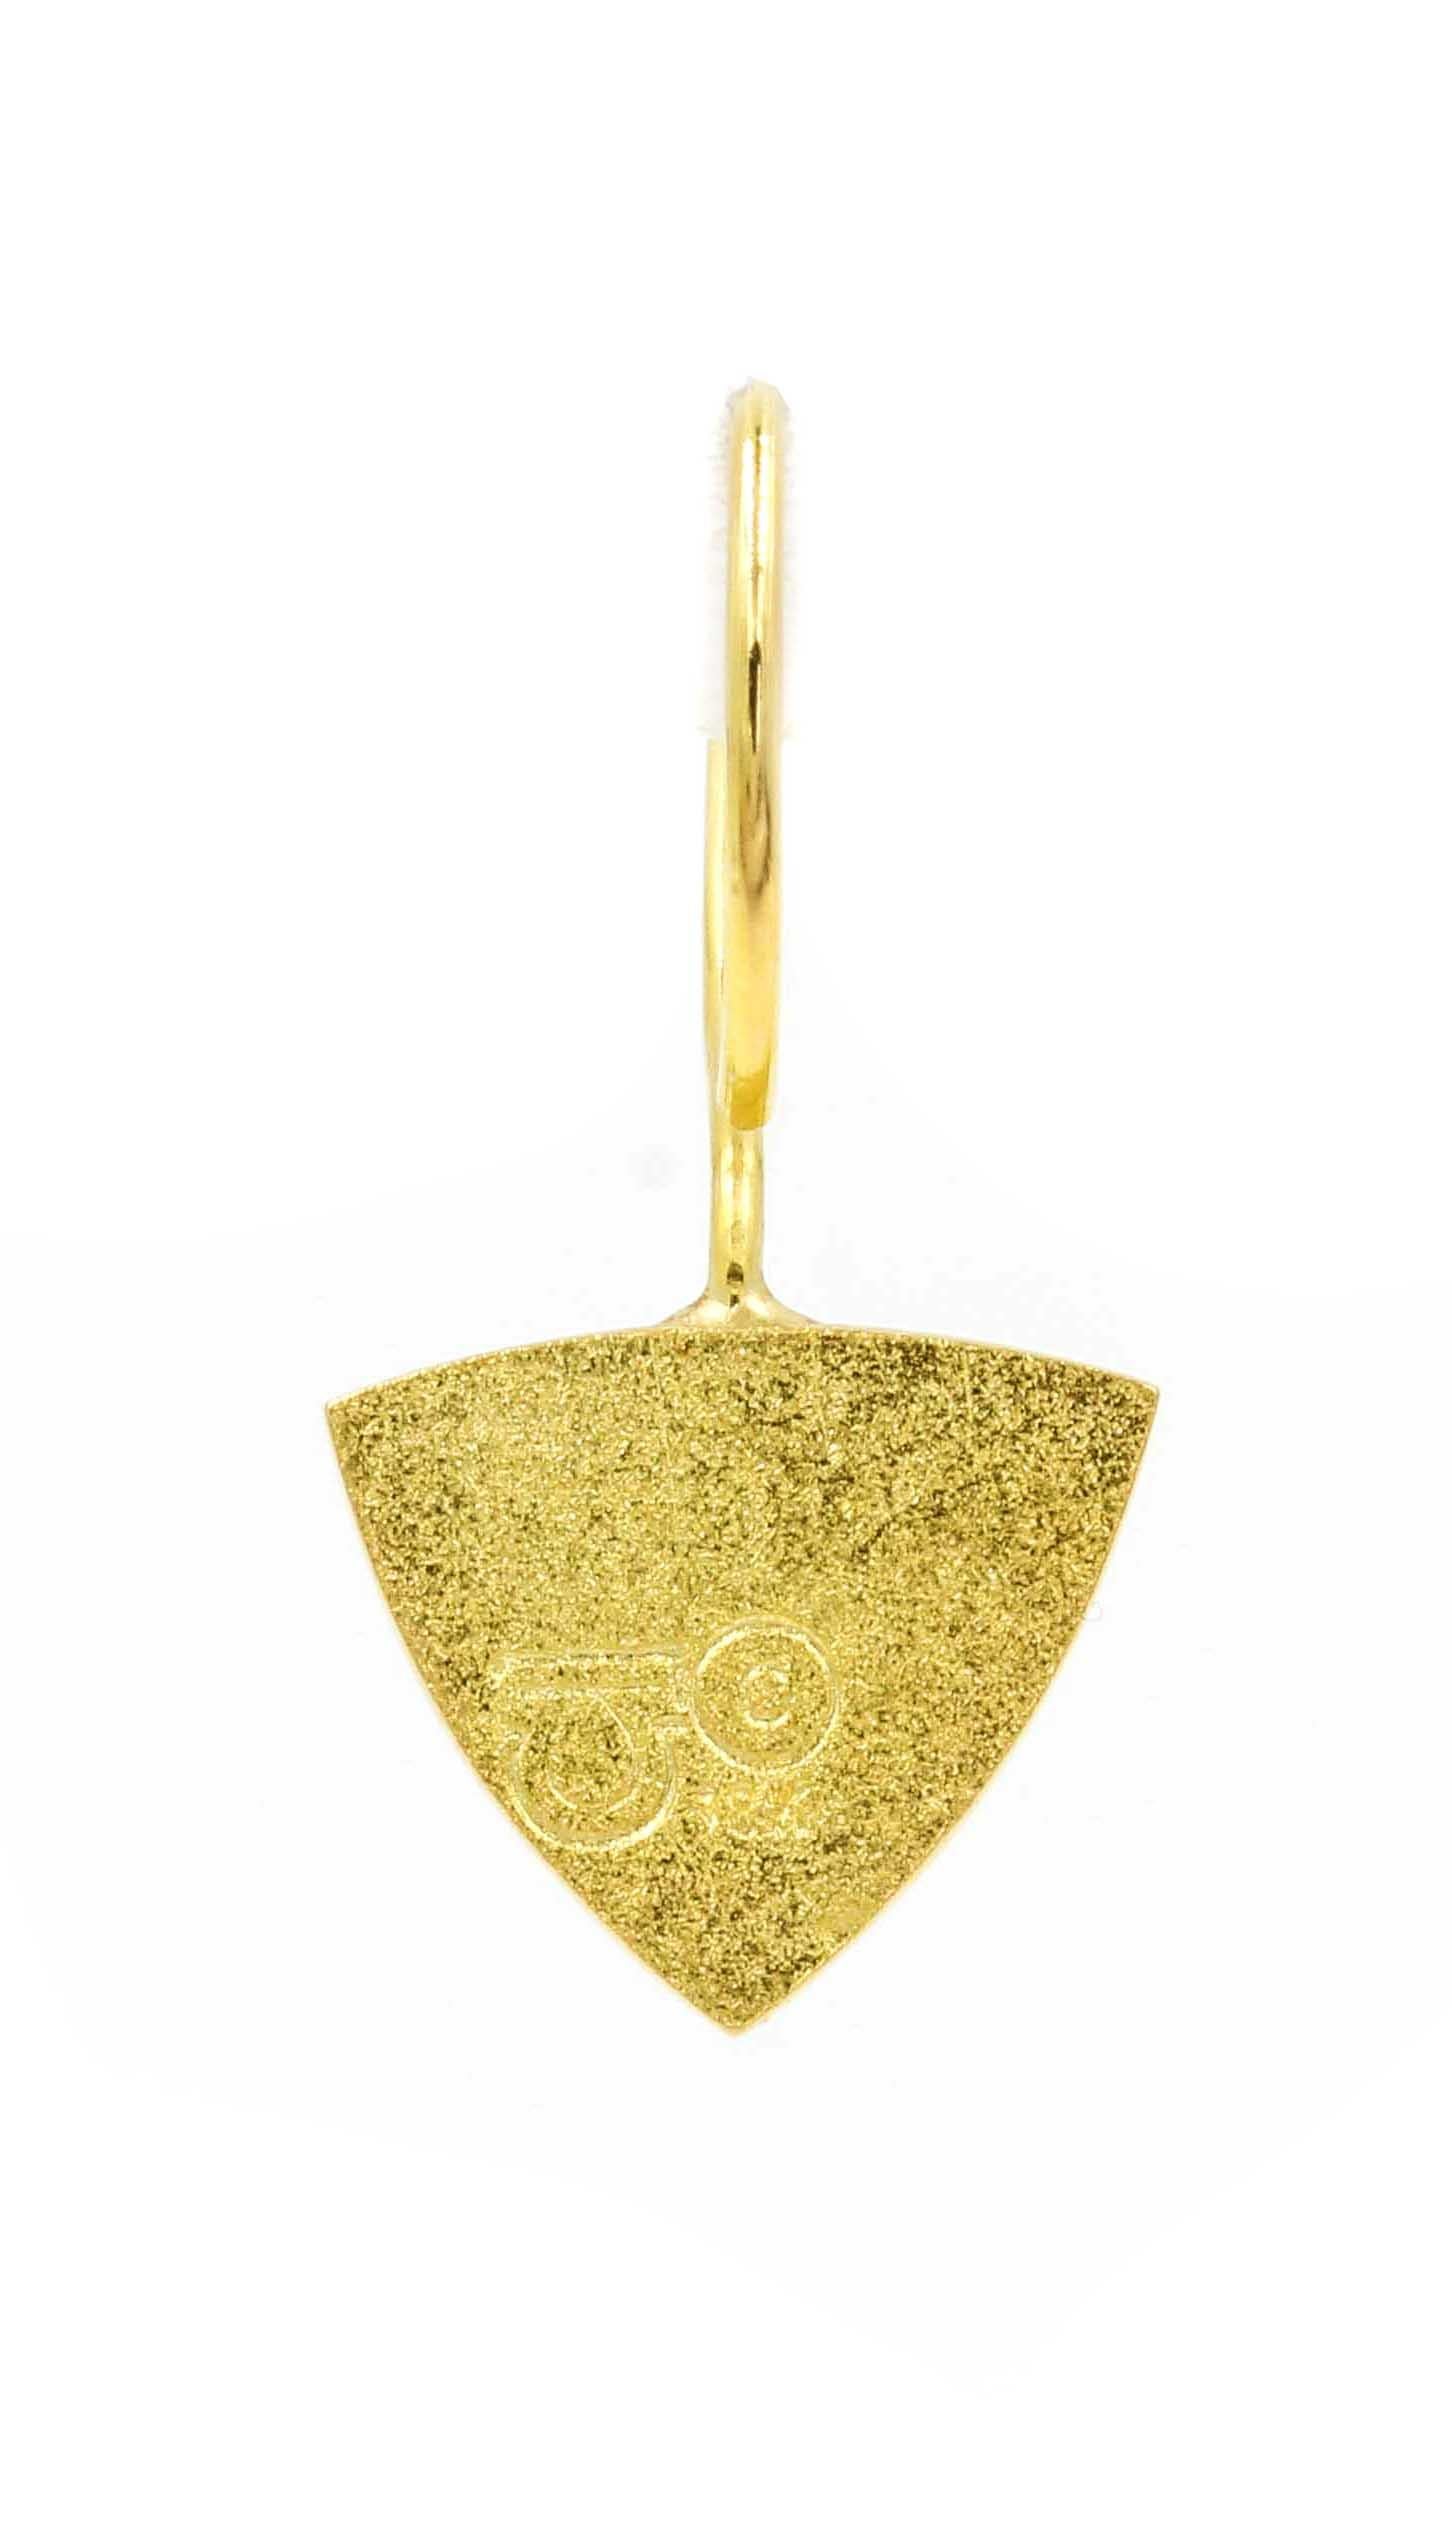 Janis Kerman, Gold and Diamond Earrings, 18 Karat Gold Diamond